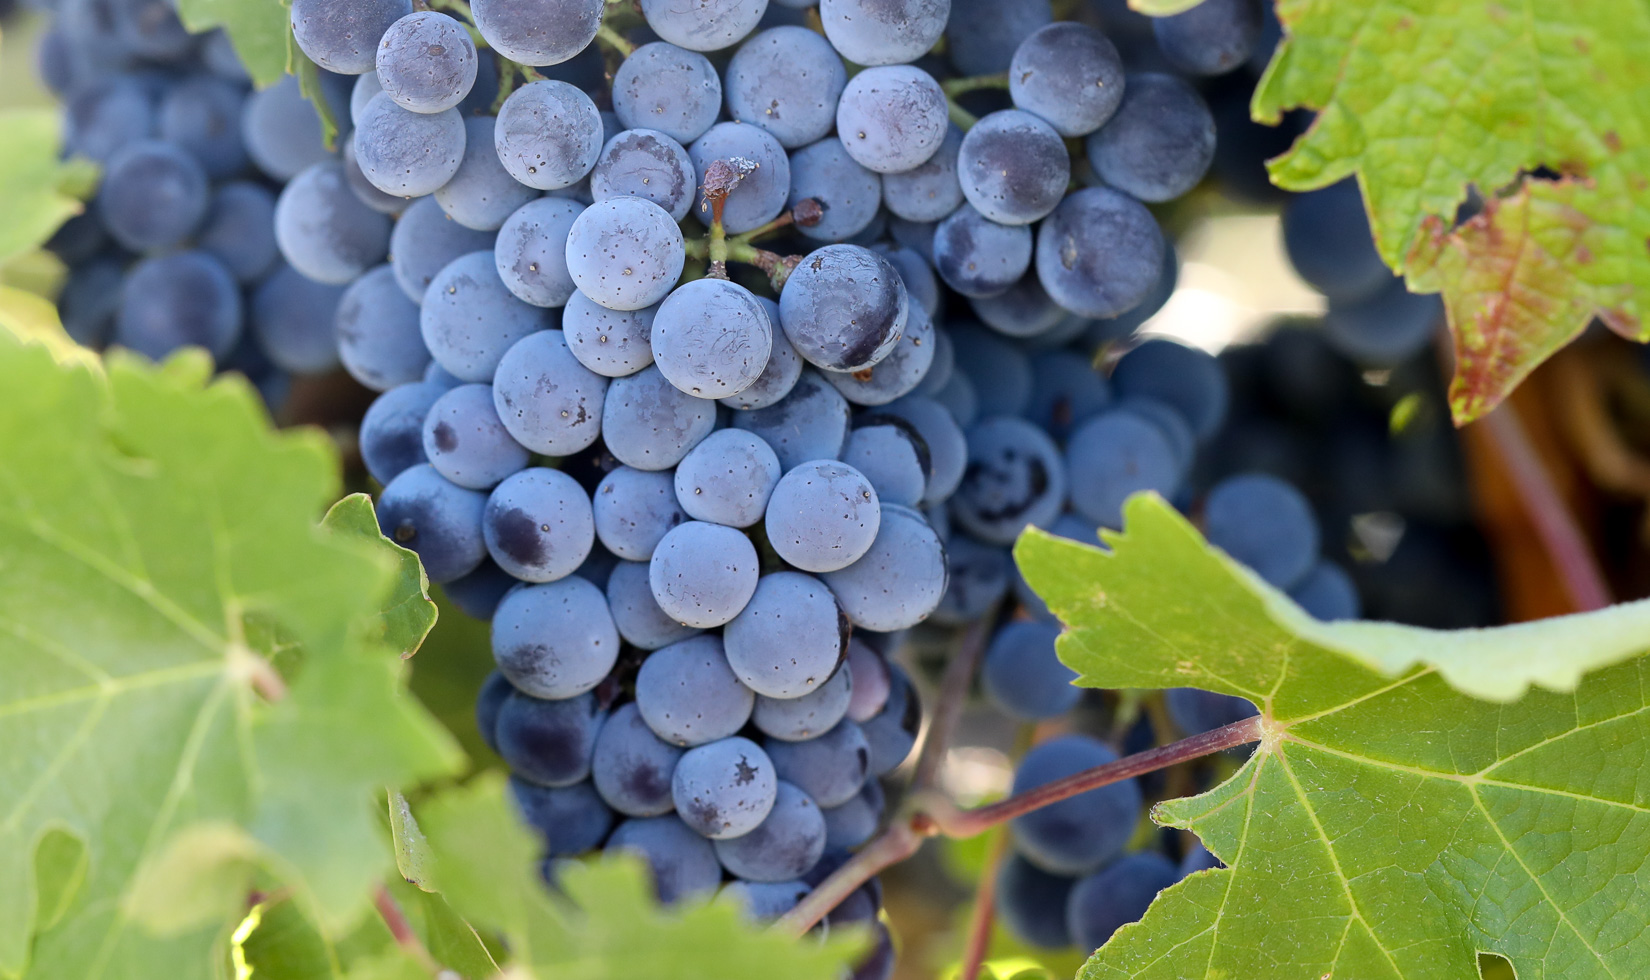 cabernet sauvignon grape clusters hanging on vine